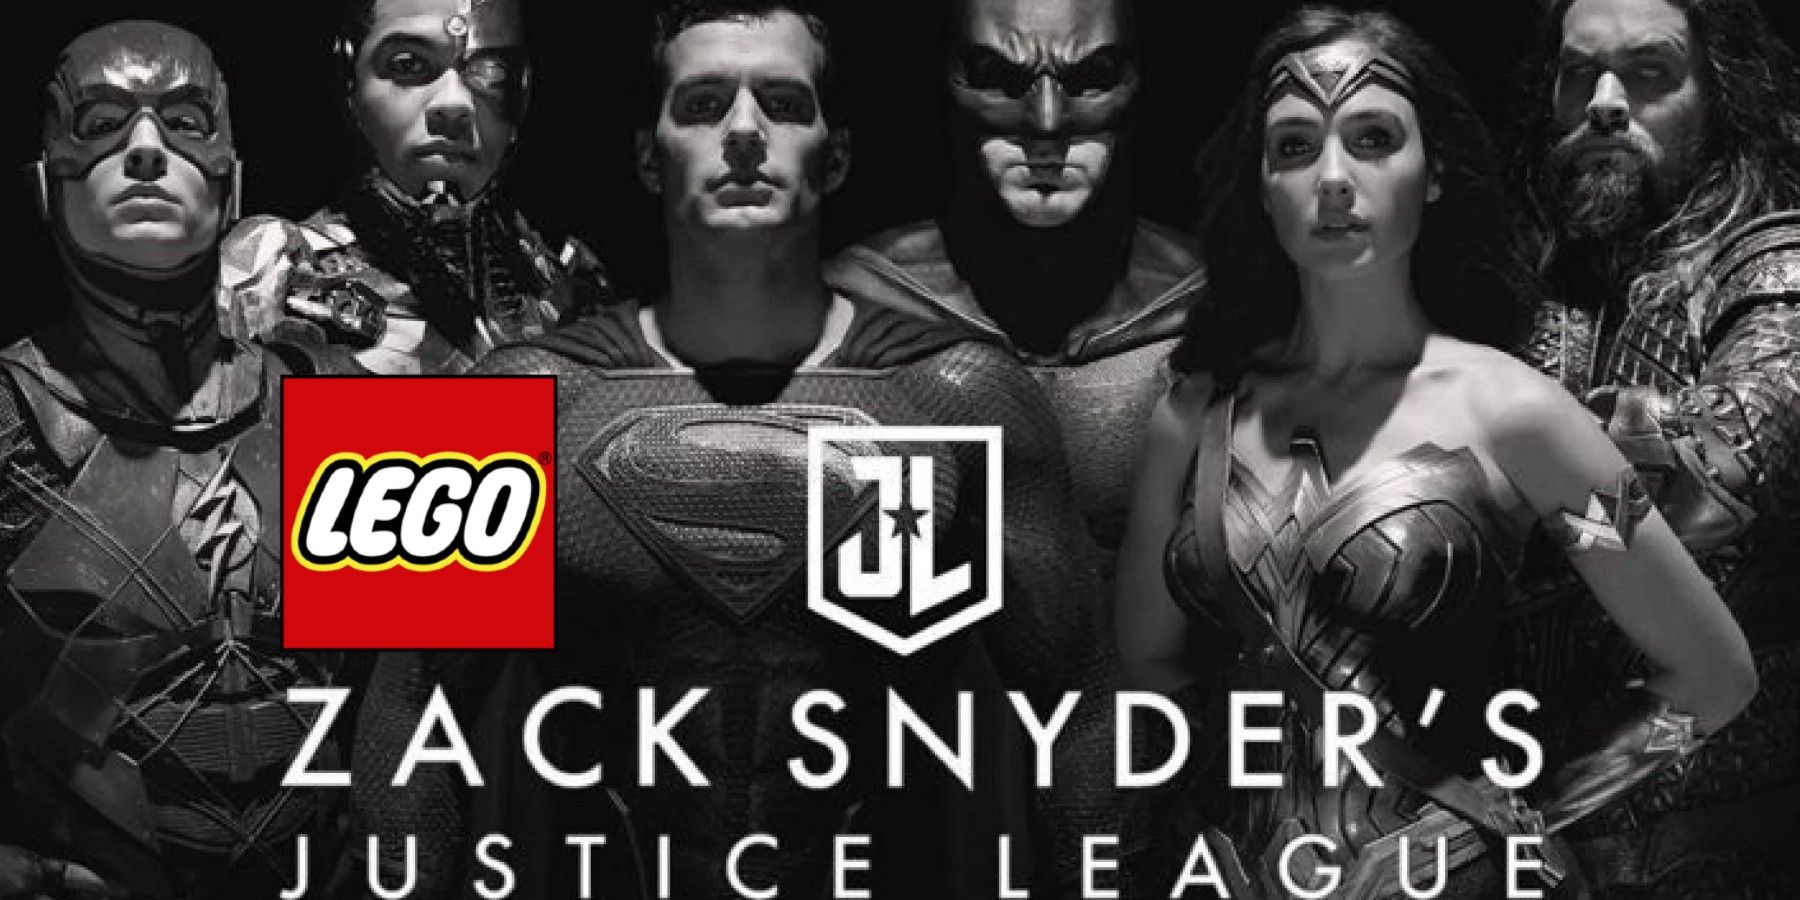 Zack Snyder Justice League LEGO